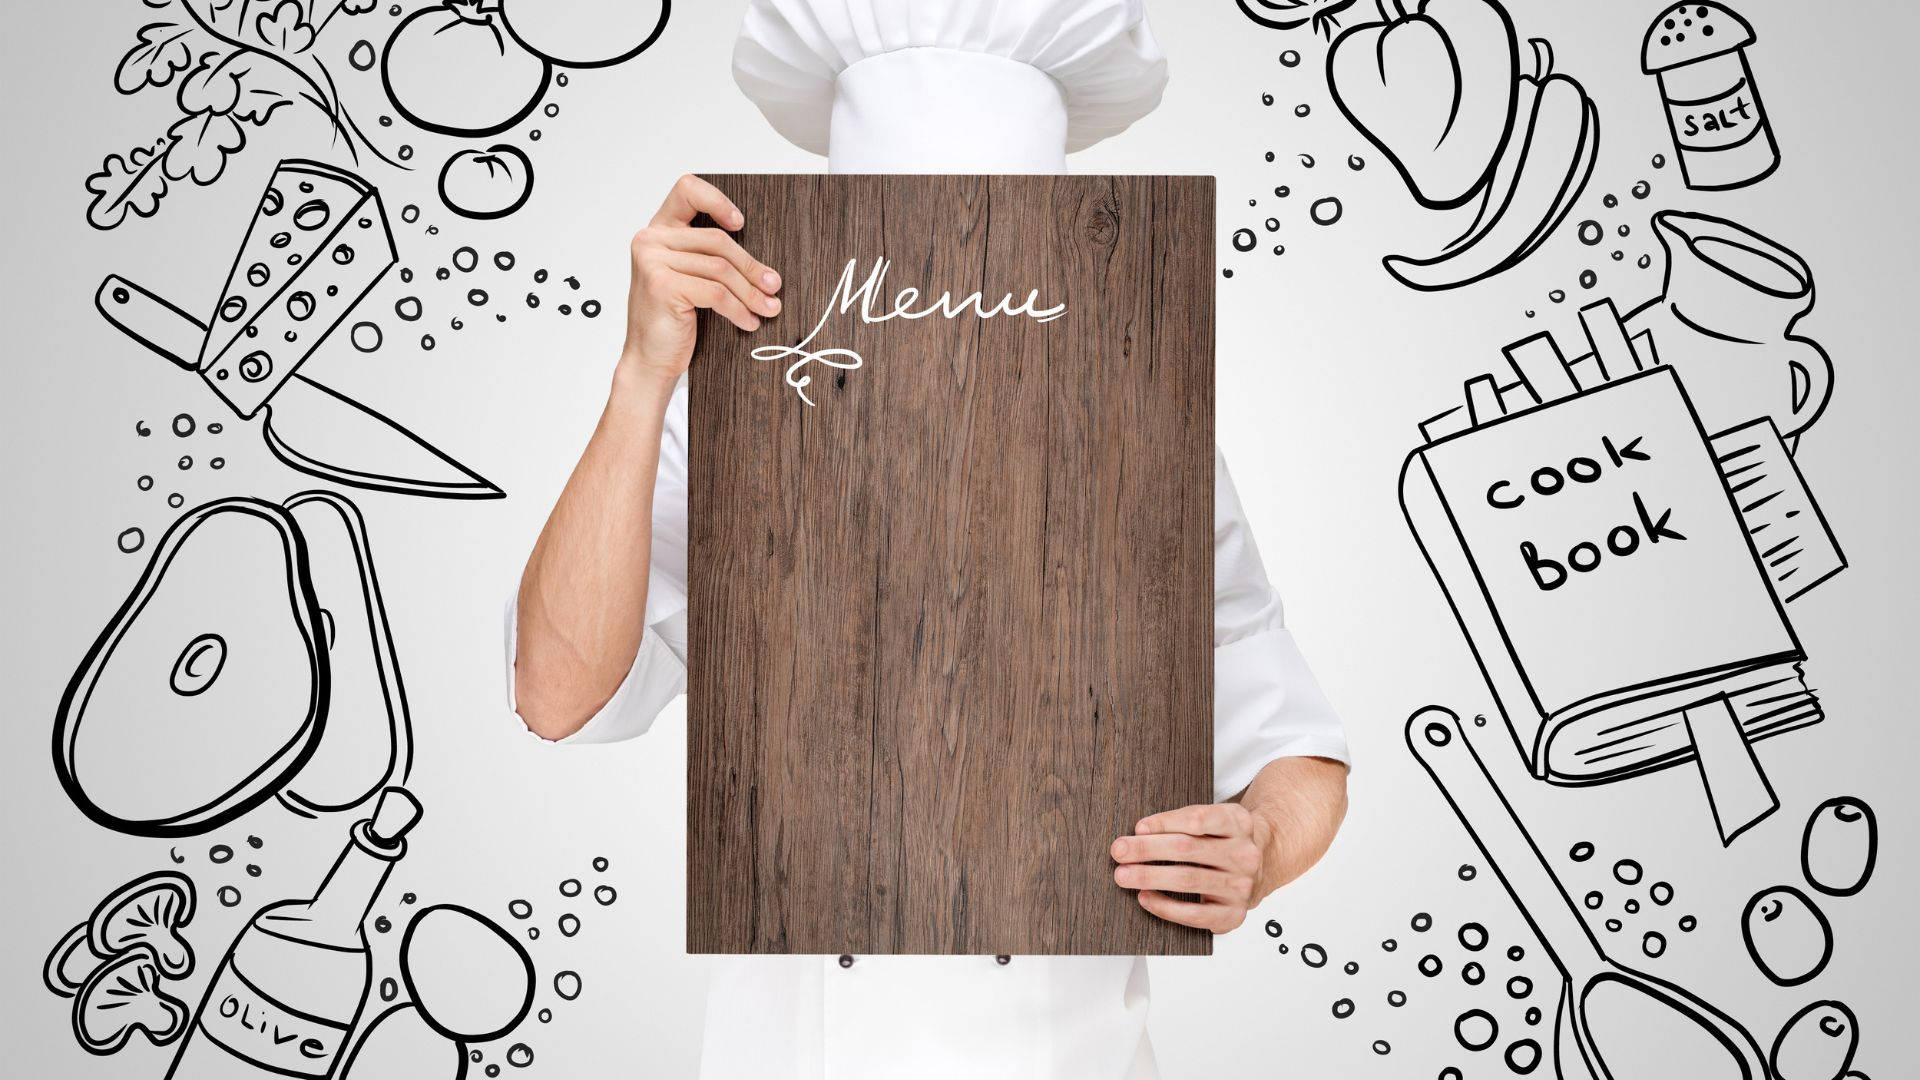 Menu Blank Food Chef's Food Board Wallpaper